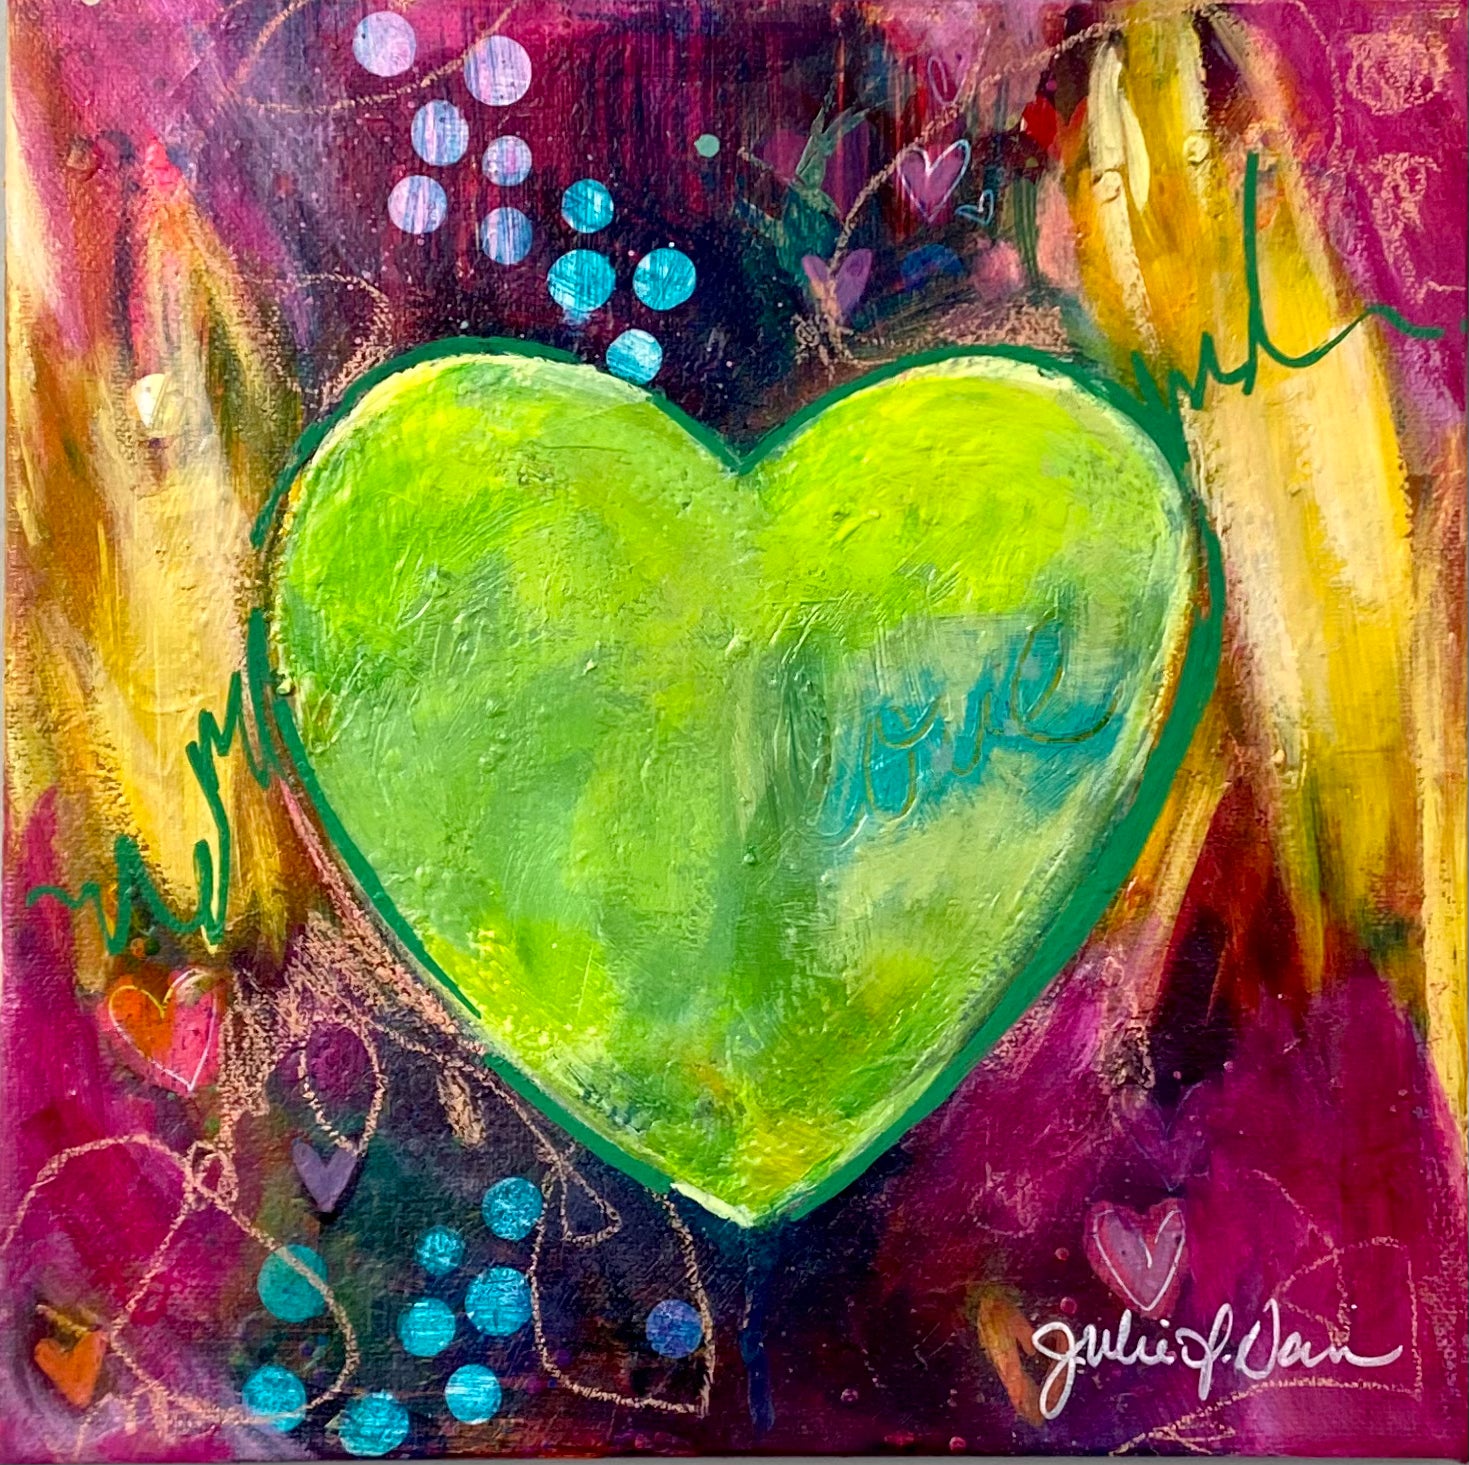 Follow Your Heart No. 5 10x10" Original on Canvas